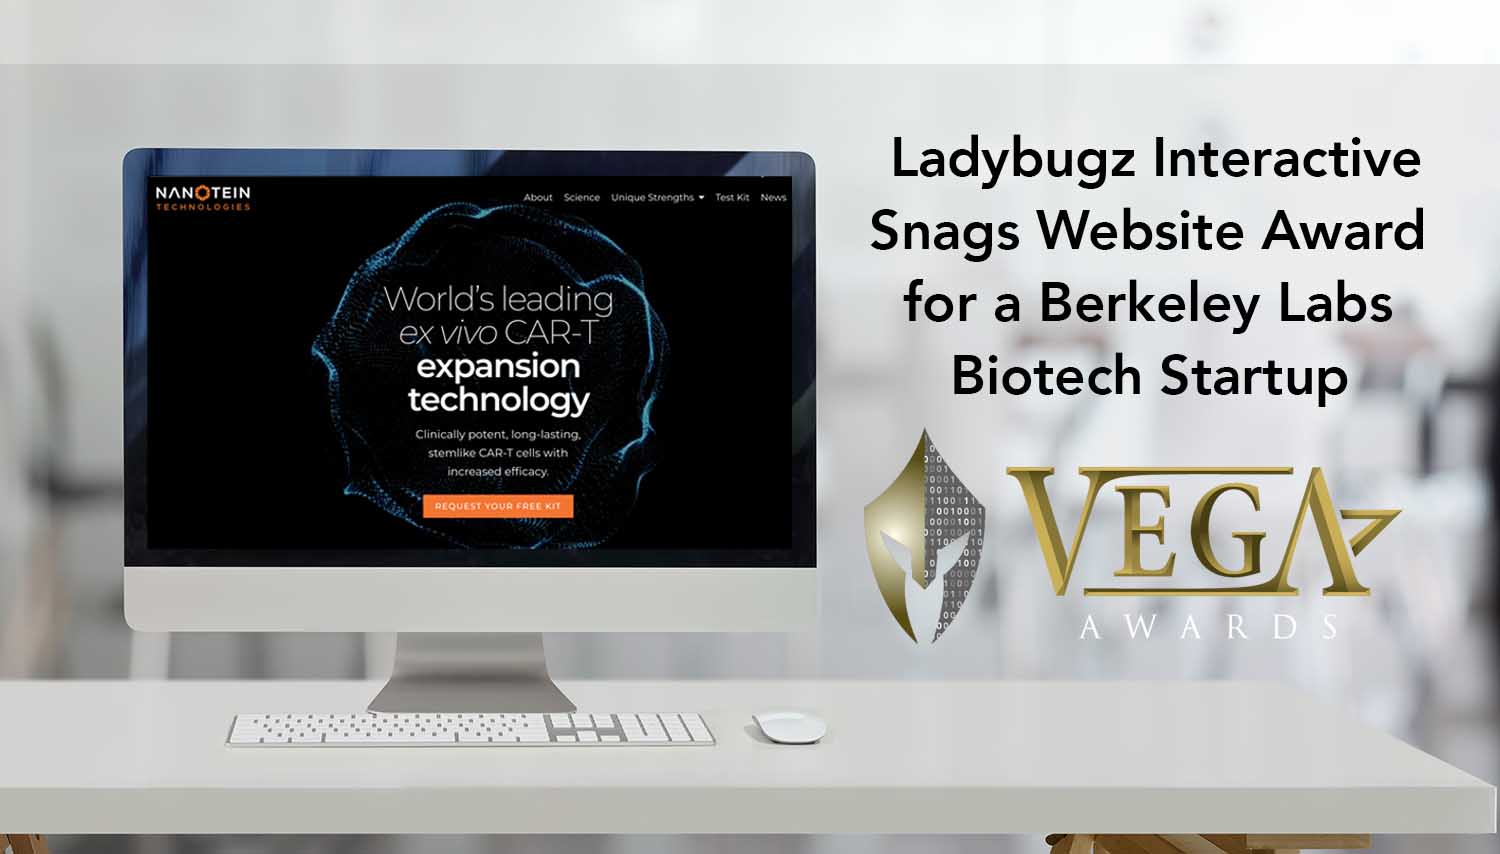 Biotech Website Award OG Image that shows in social media.